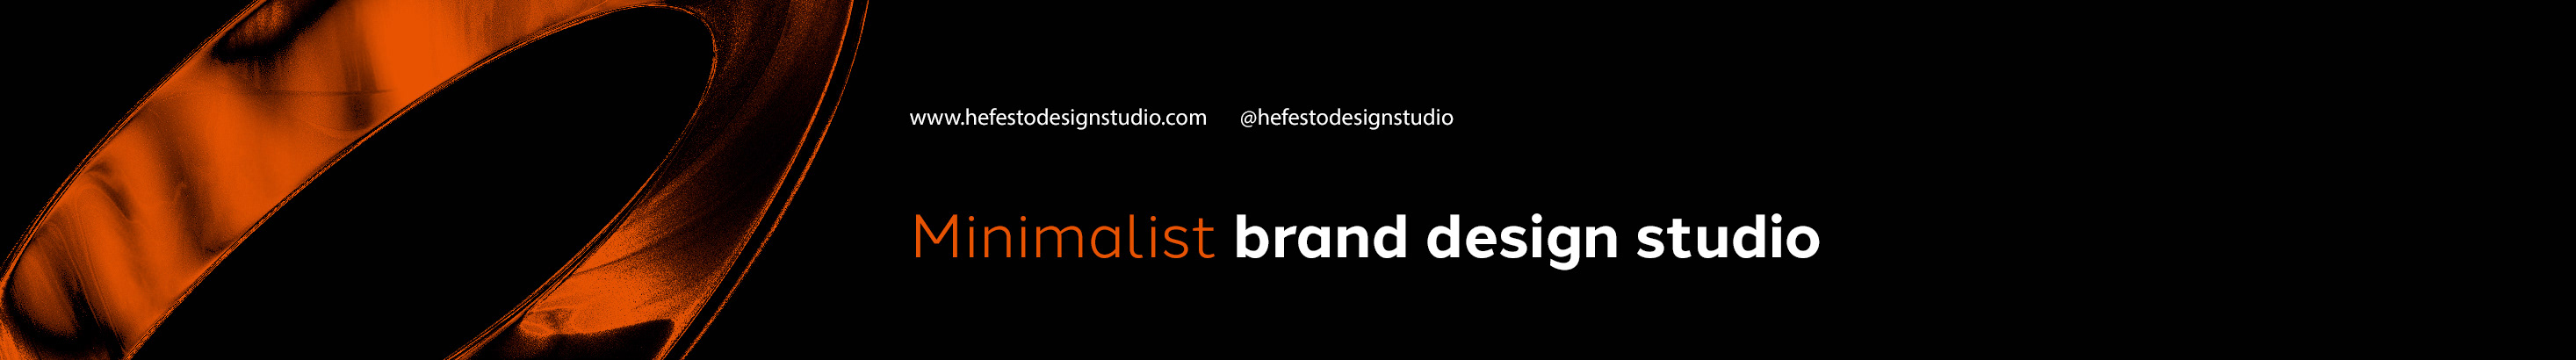 Bannière de profil de Hefesto Design Studio